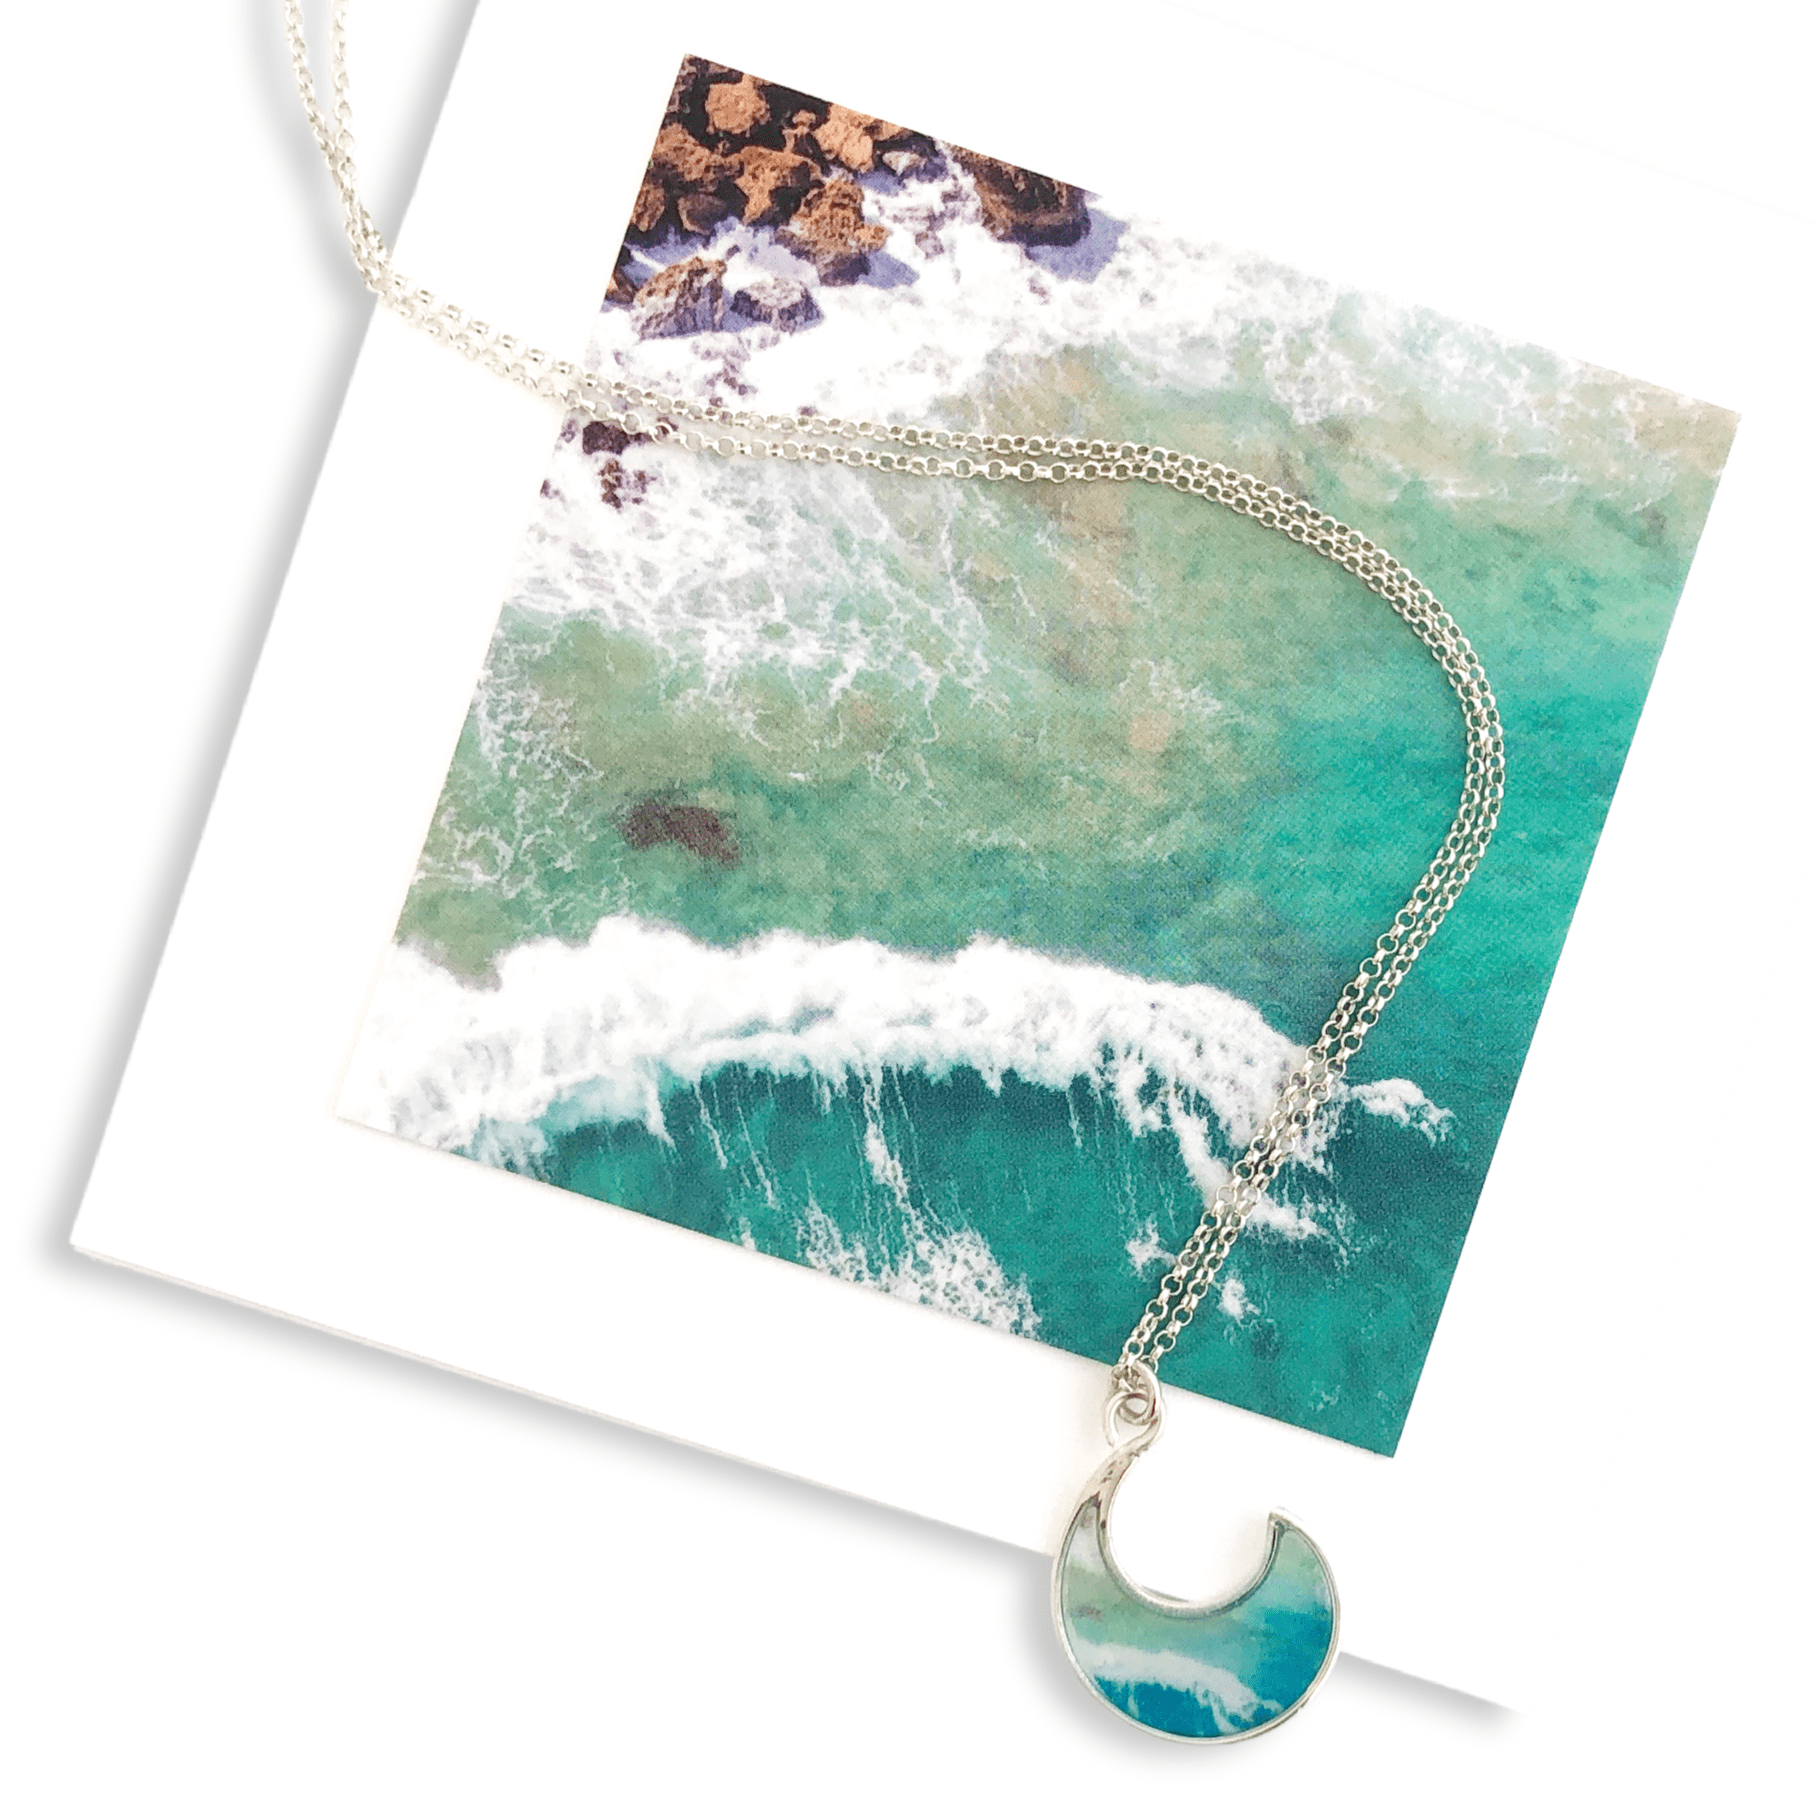 Jersey Shore Wave Necklace by Chloe Masco